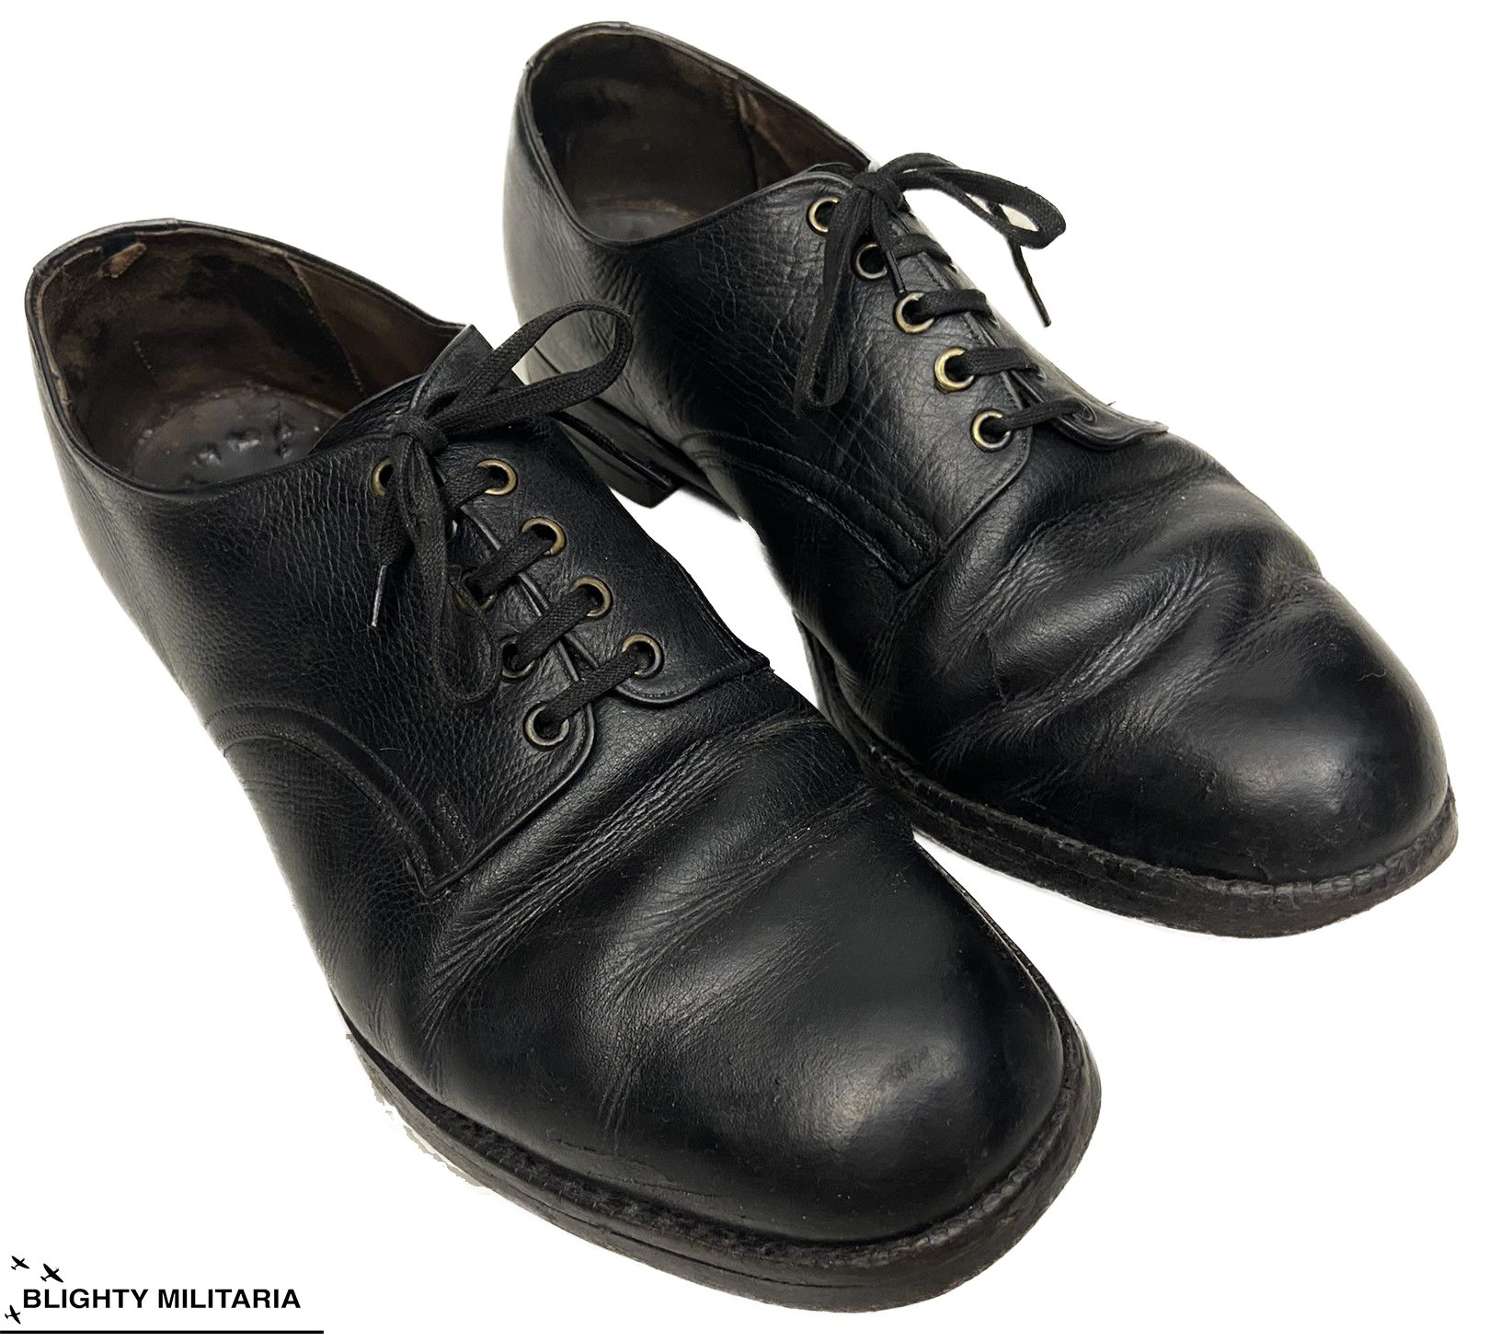 Original RAF Ordinary Airman's Shoes - Size 9